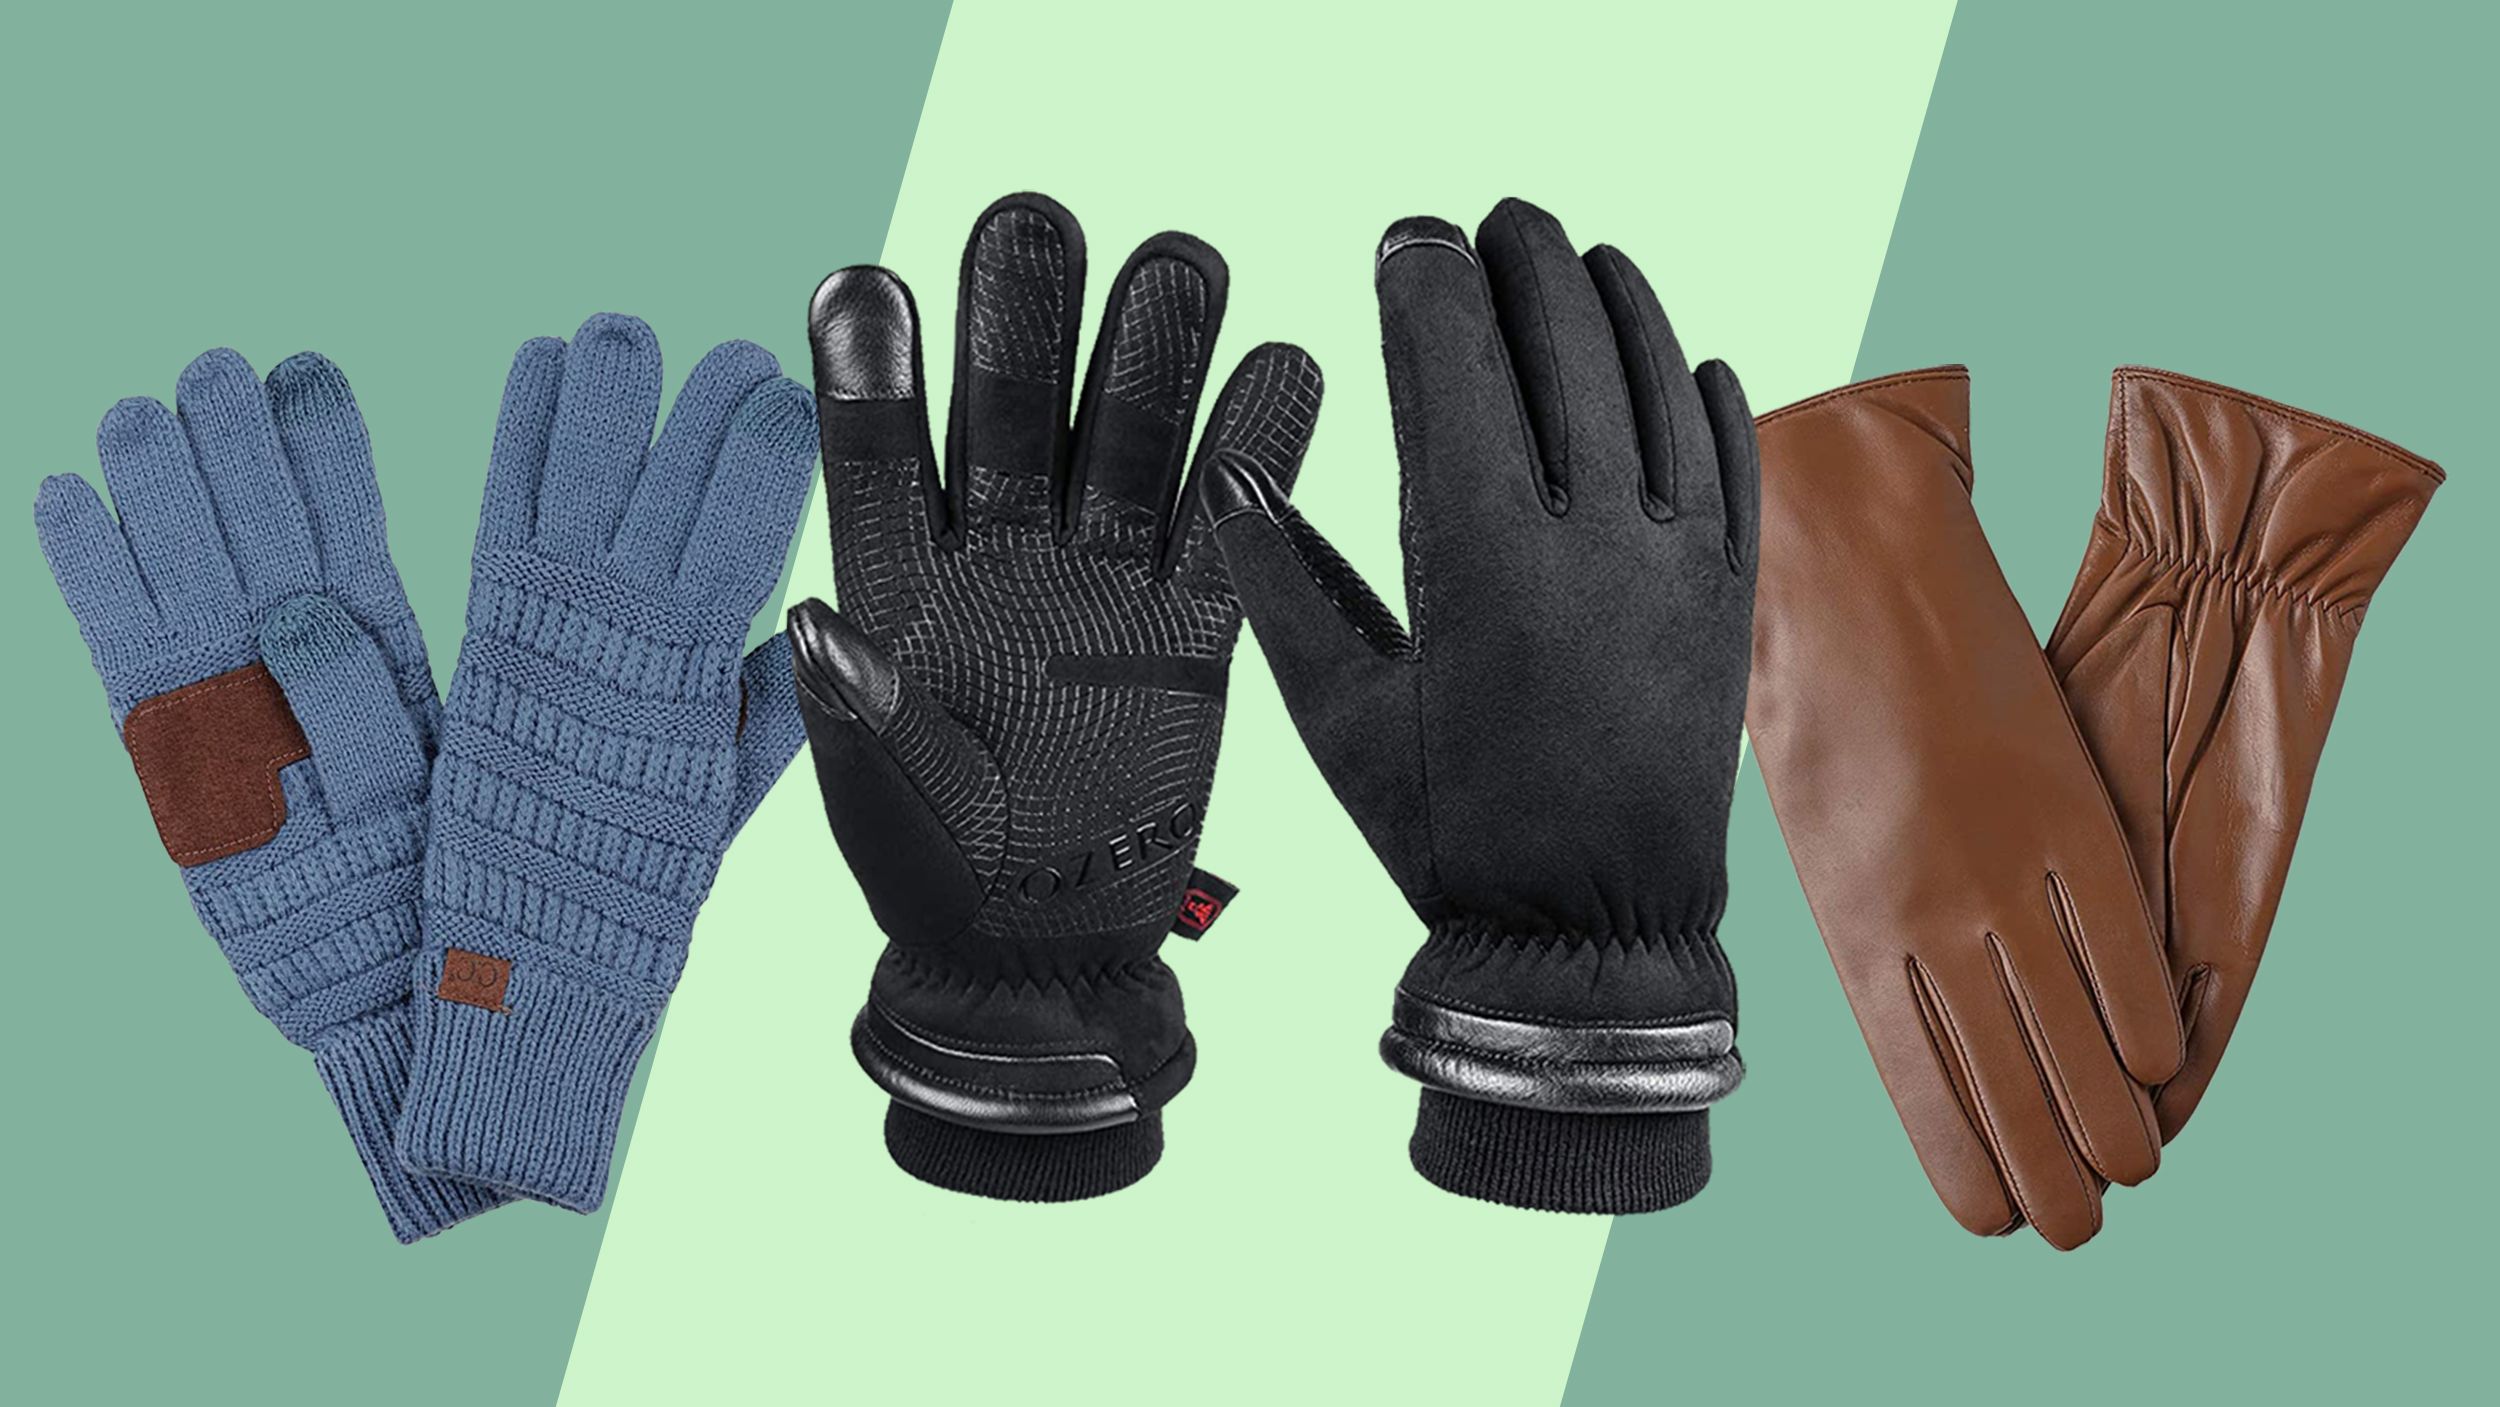 10 Best Cut Proof Gloves 2020 